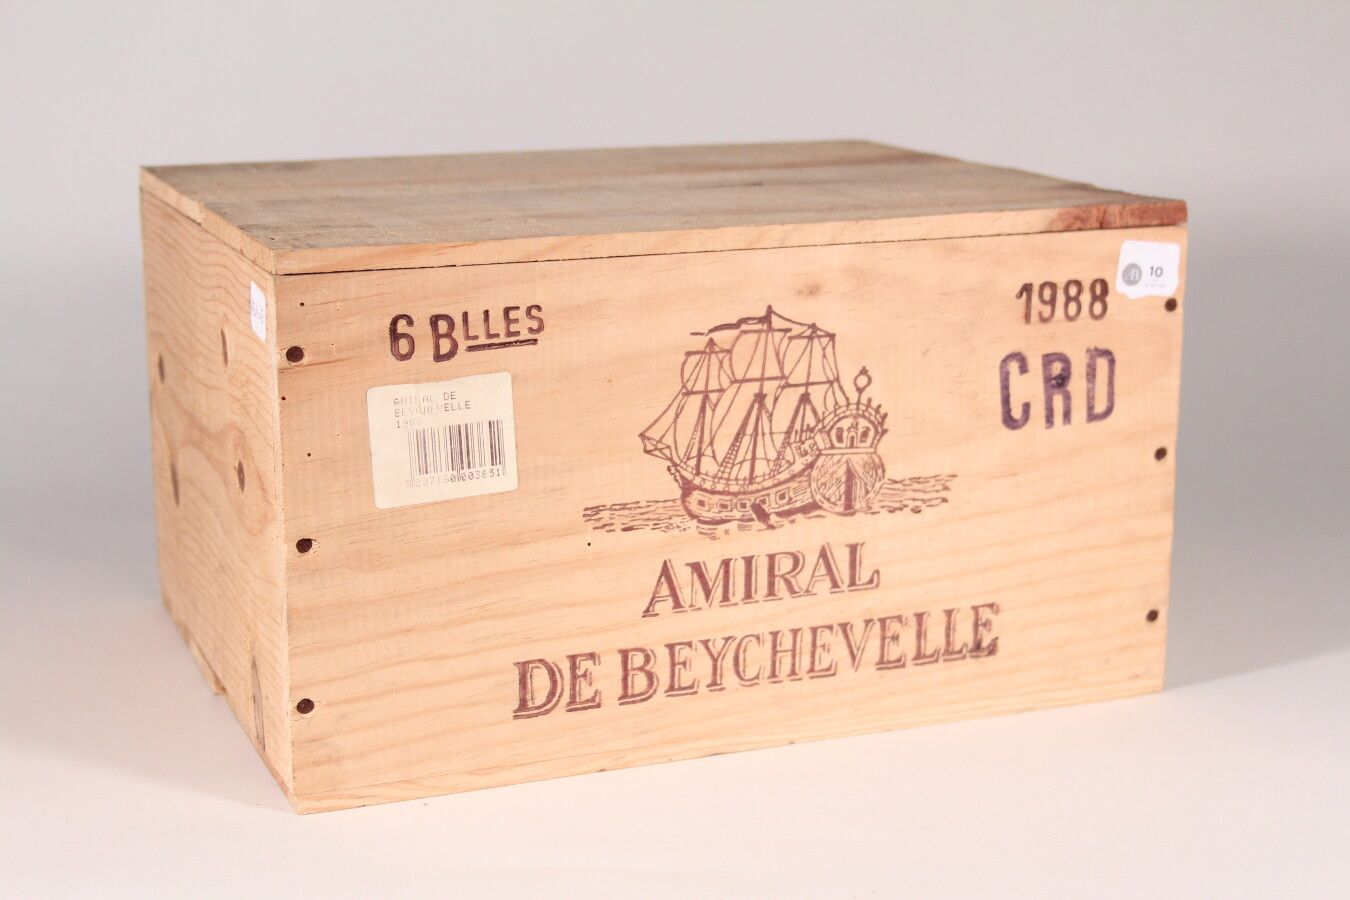 Null 1988 - Amiral de Beychevelle

Saint-Julien Red - 6 blles CBO